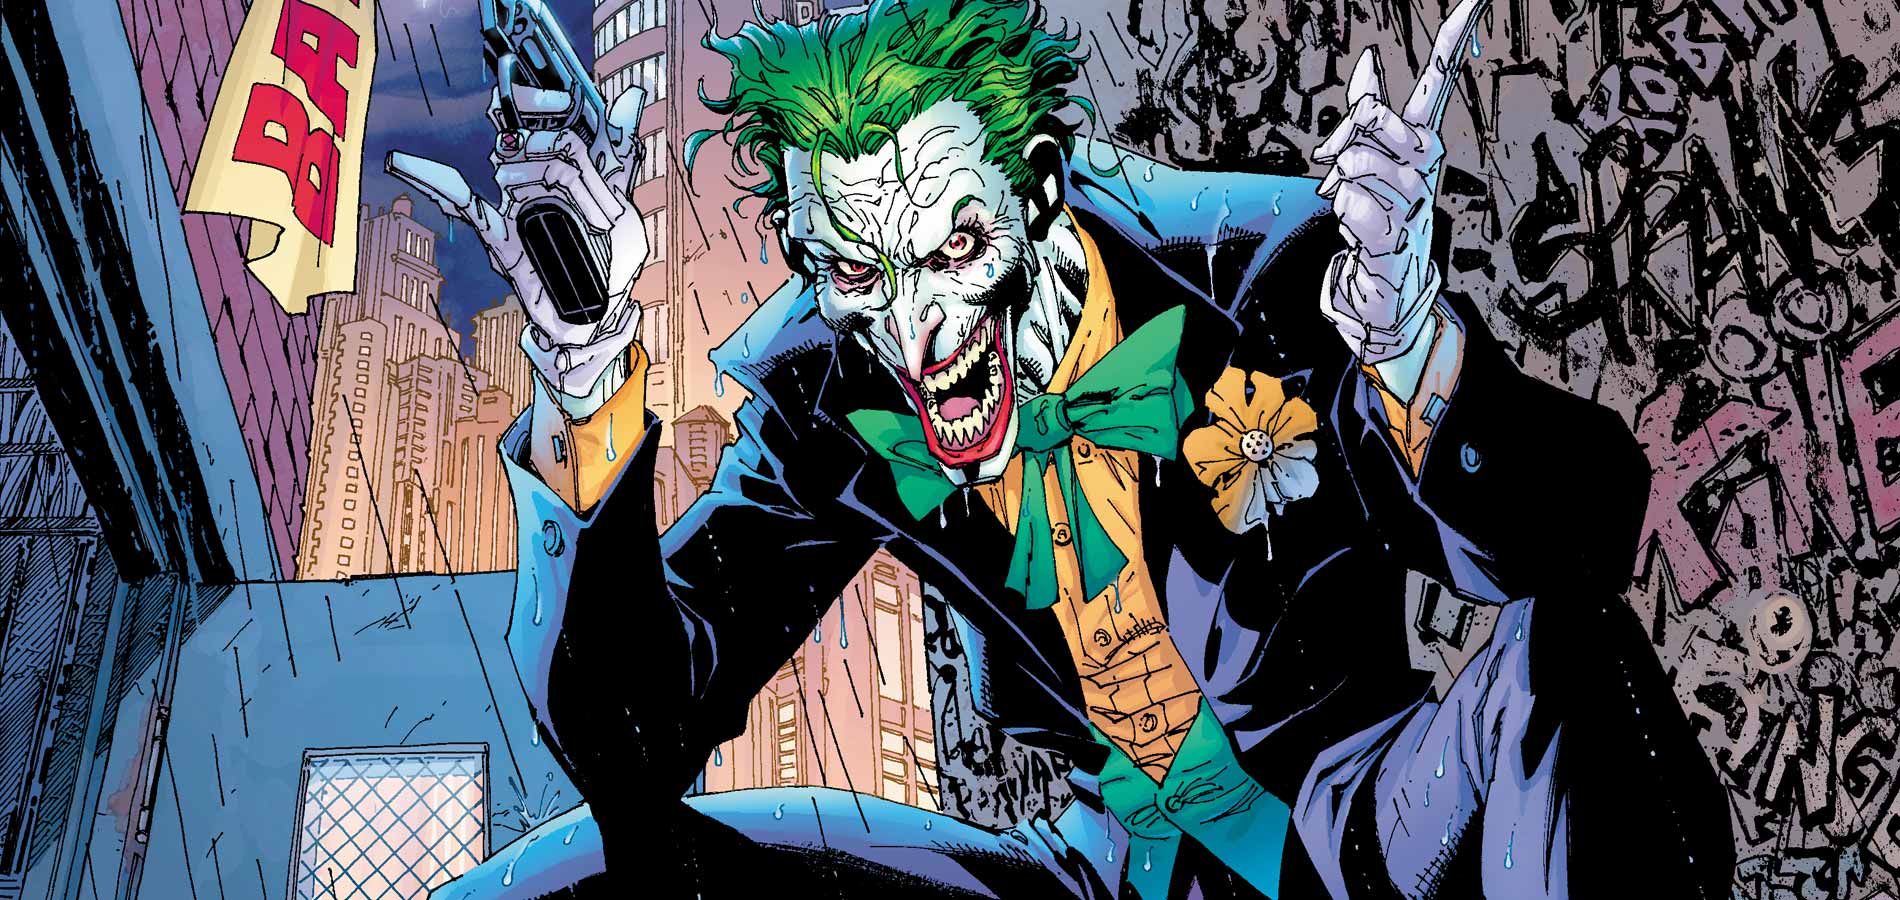 Joker Comics Wallpapers Wallpaper Cave